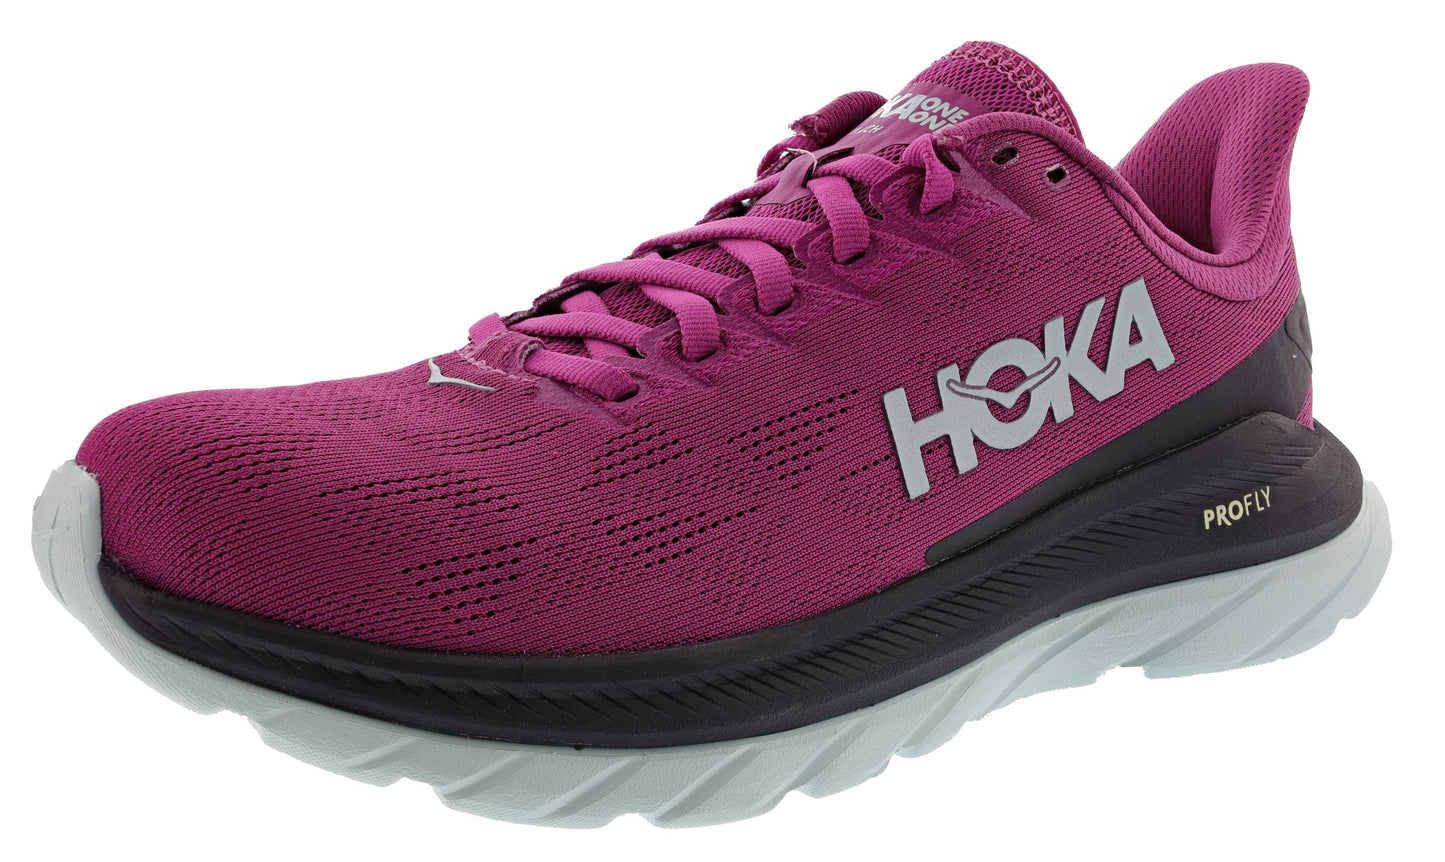 Hoka One One Mach 5 Women's Size 10.5 B (Medium) Running Shoes Teal